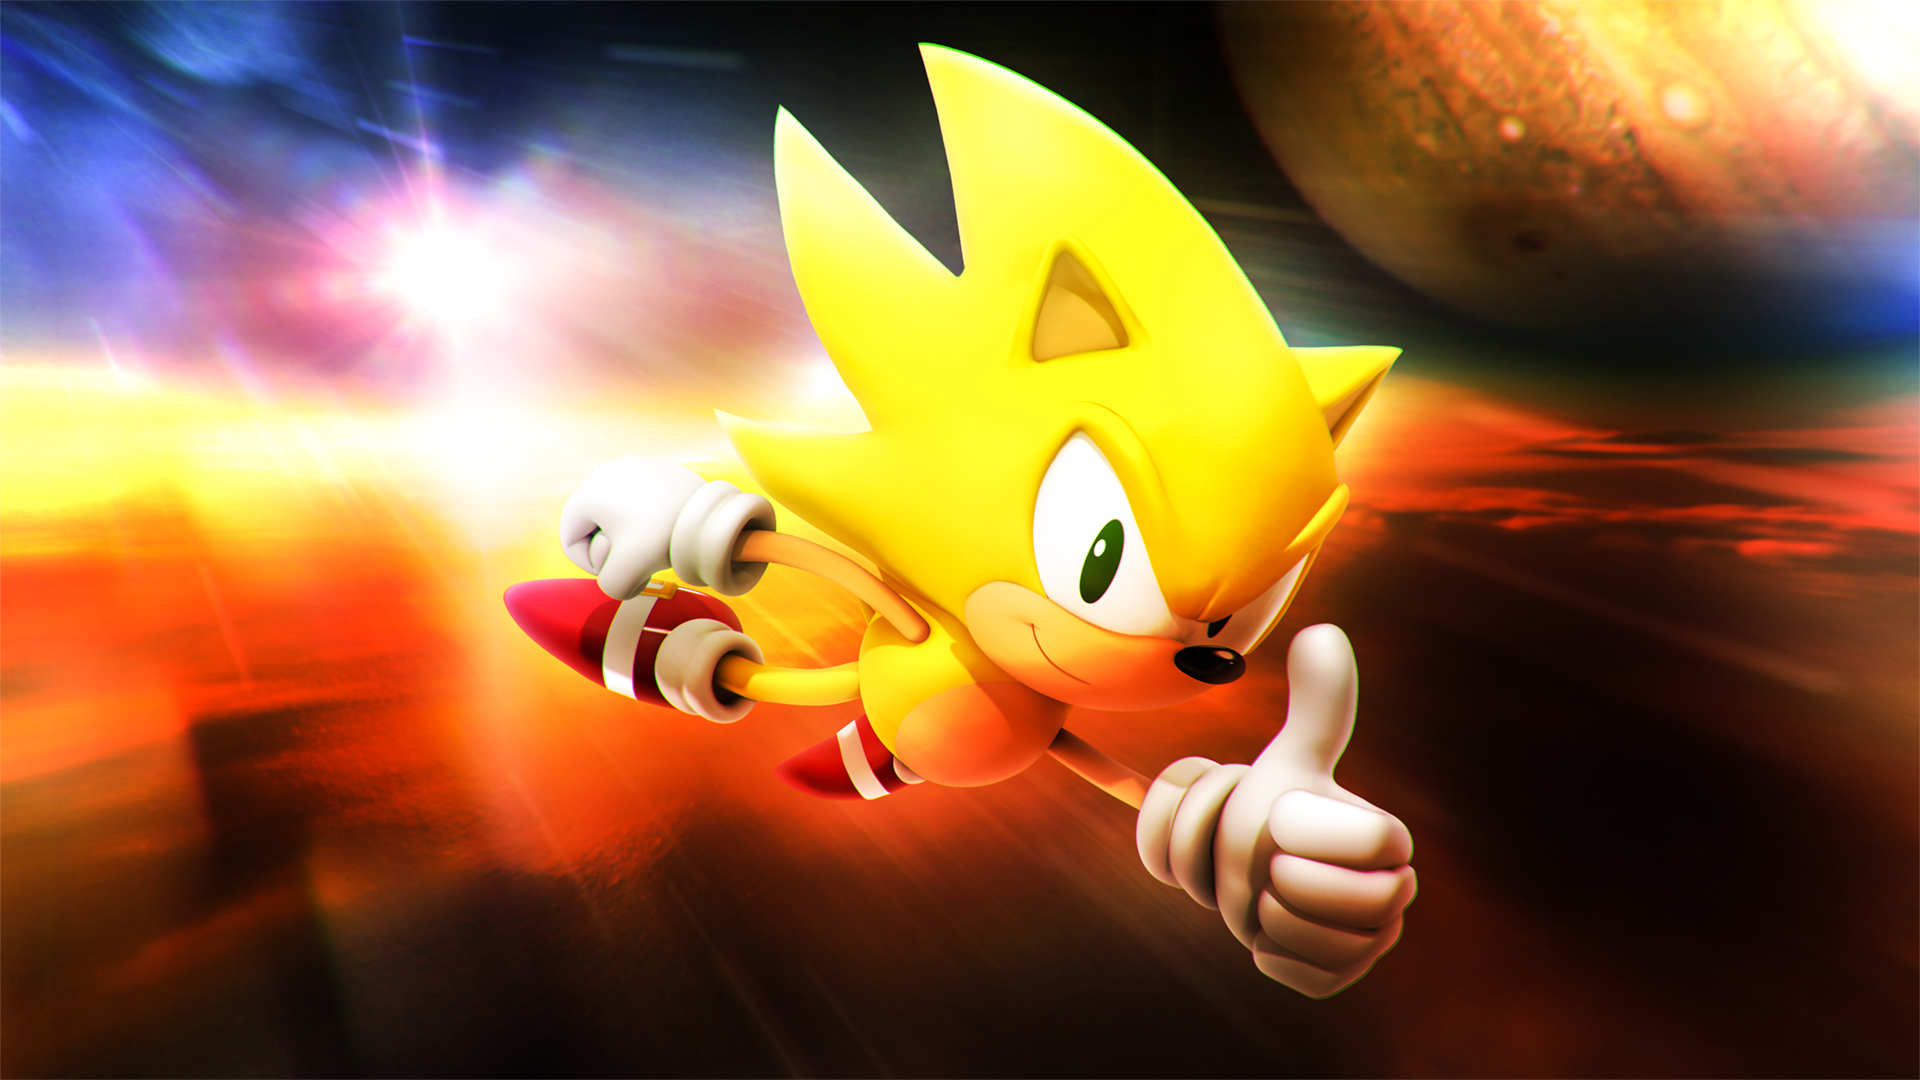 super sonic  Sonic the Hedgehog Wallpaper 44702194  Fanpop